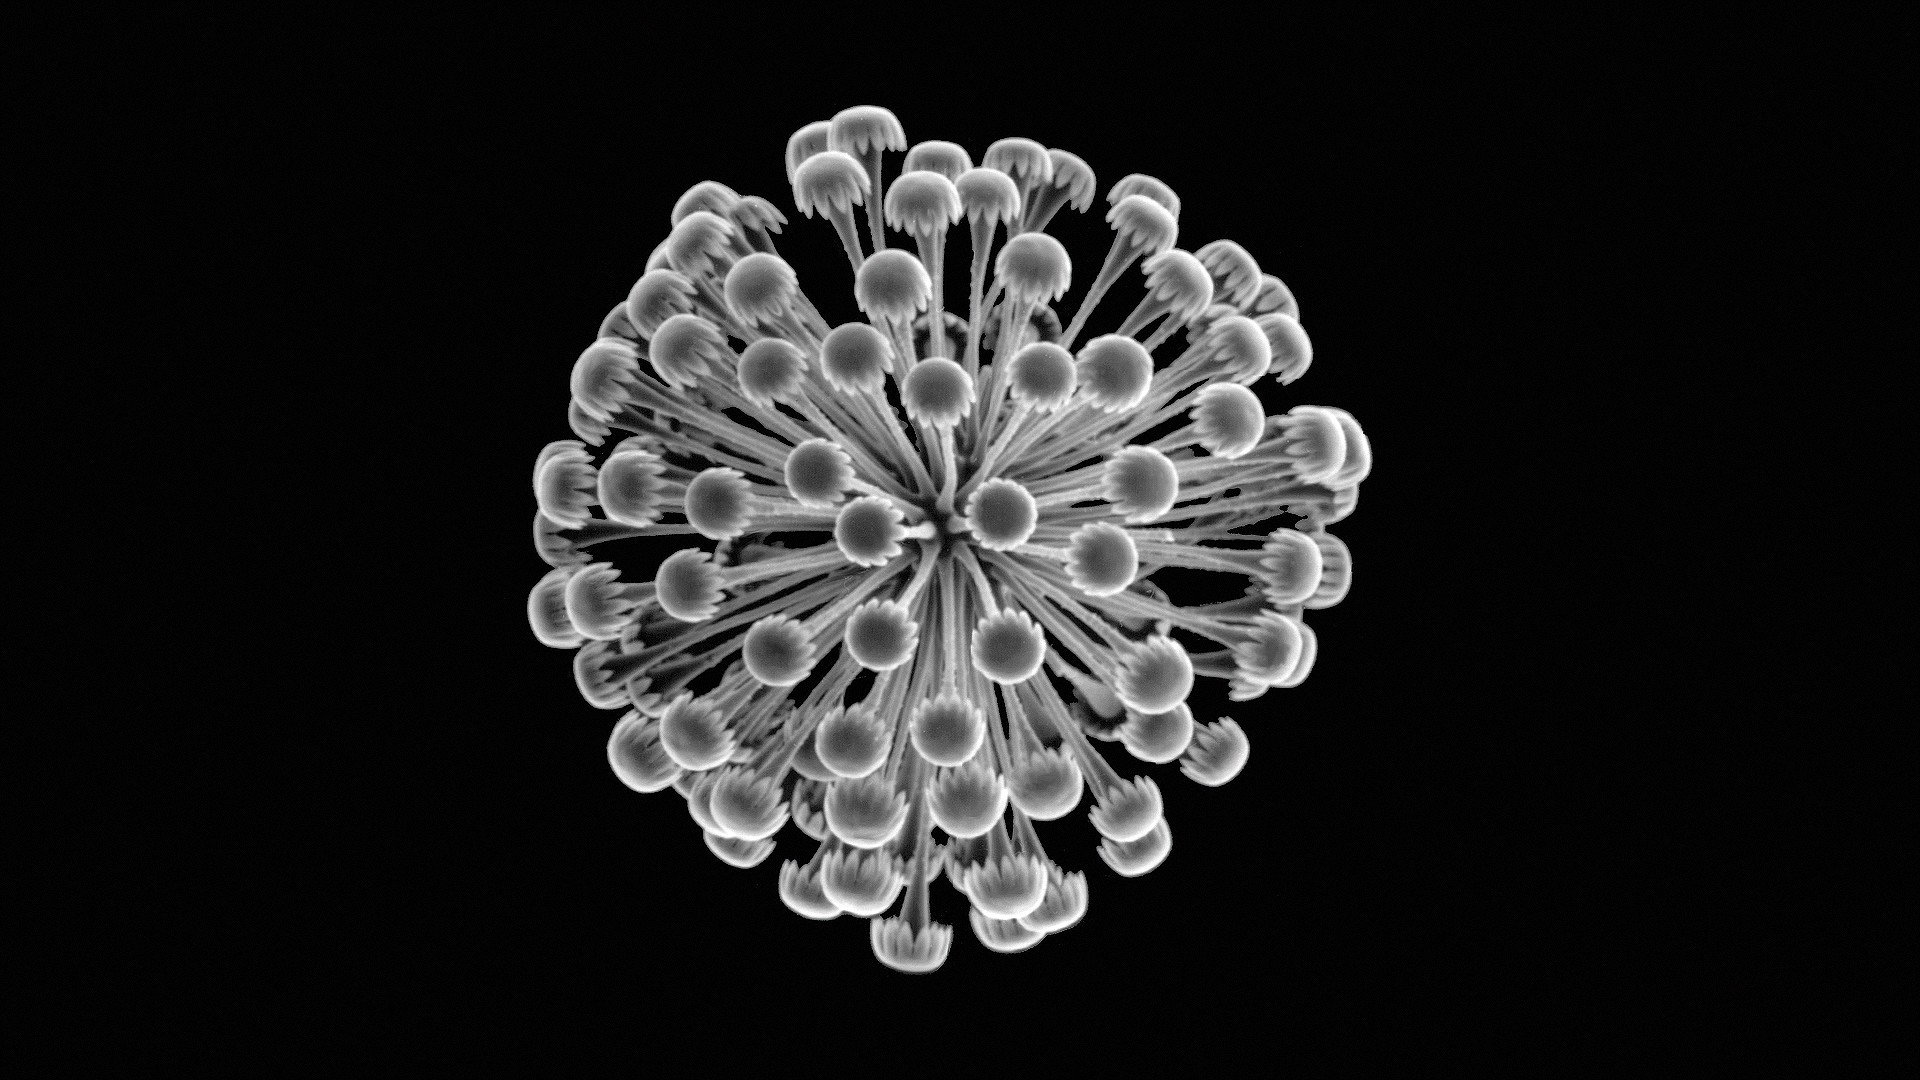 General 1920x1080 monochrome black background minimalism underwater plants nature deep sea sea sponge